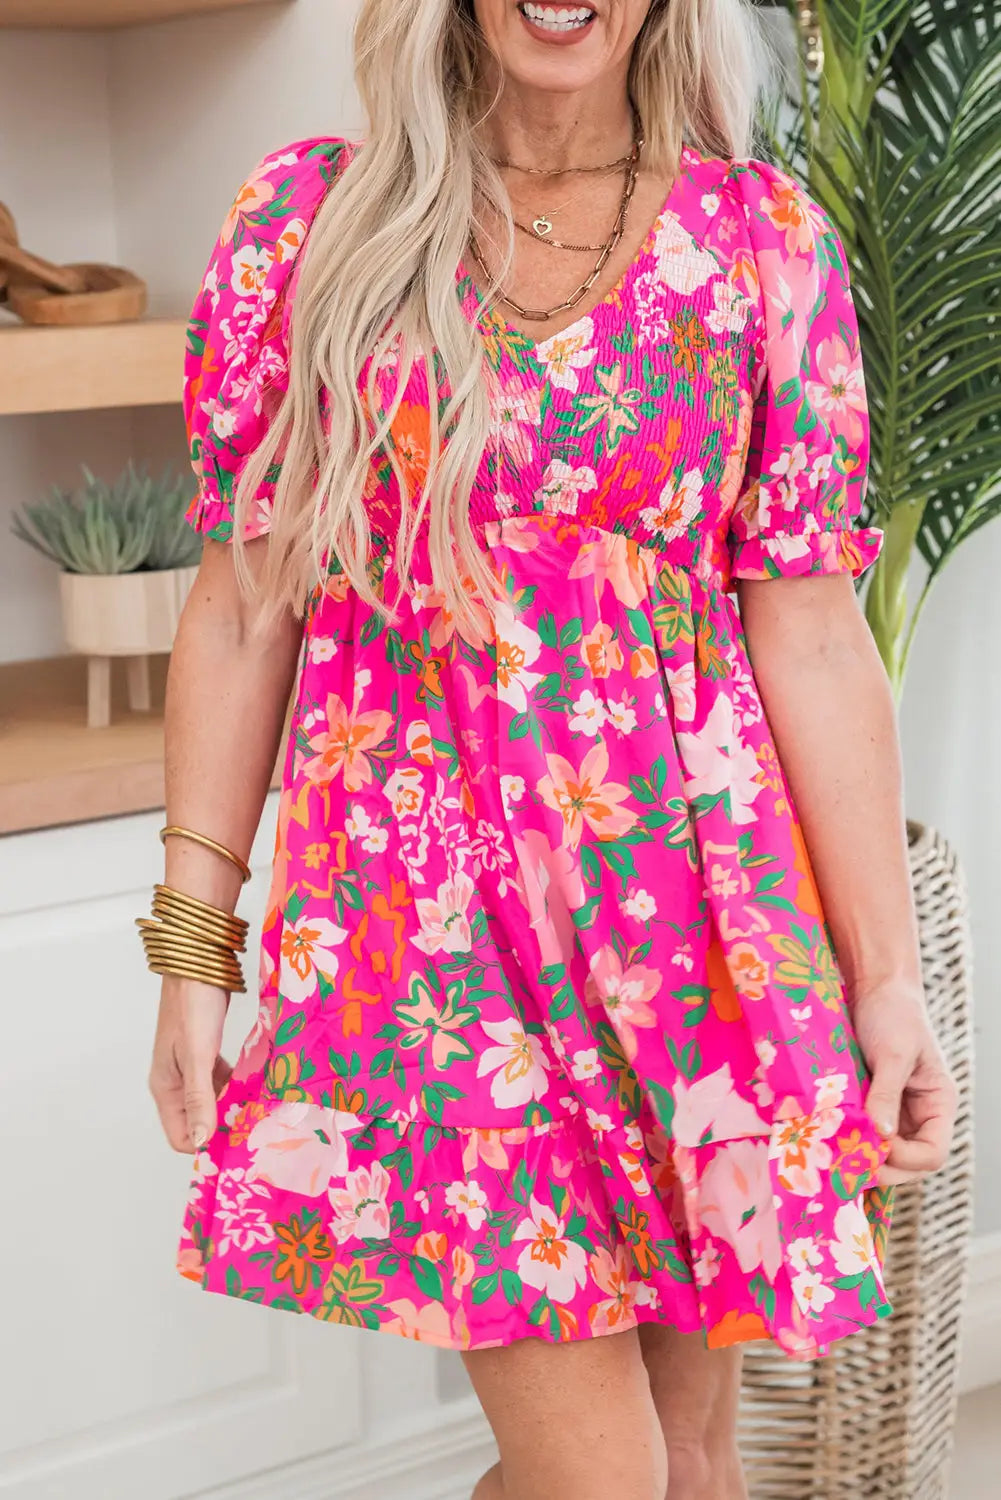 Rose summertime dress - floral smocked bodice - s / 100% polyester - dresses